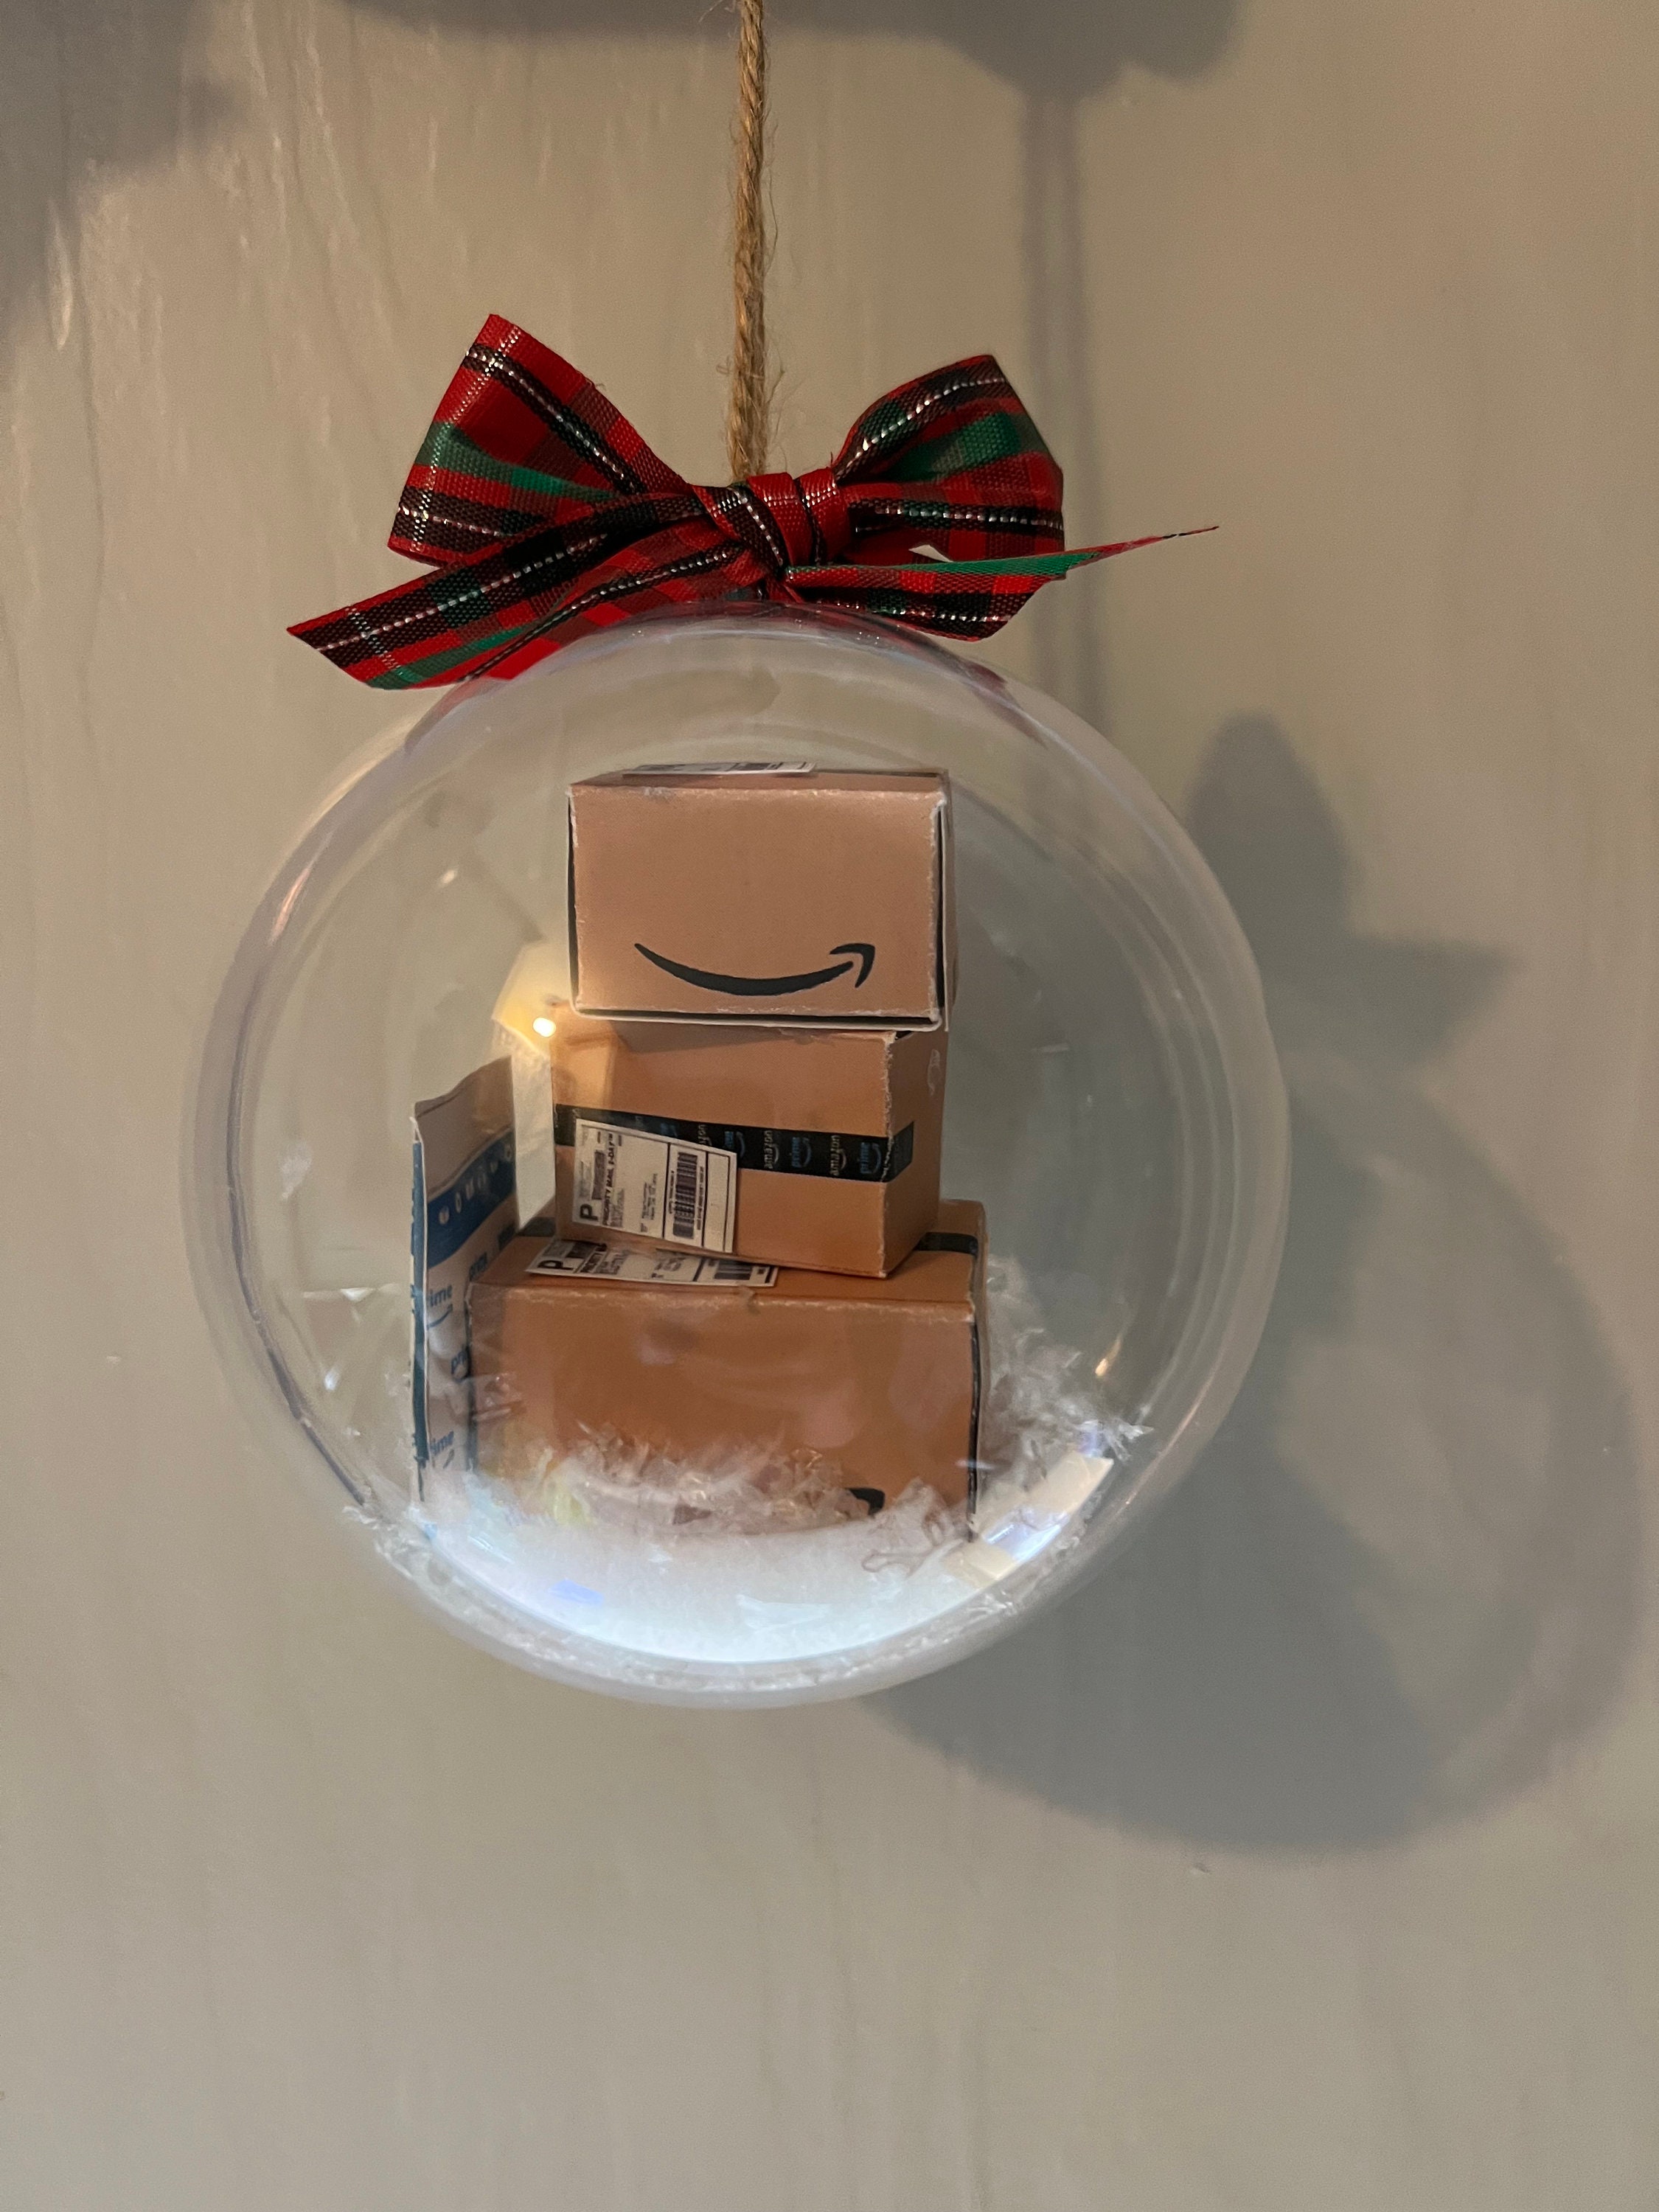 3 Flat Disc Ornament Box SVG, Christmas Ornament Gift Box Svg, Christmas  SVG, Christmas Box Template, Ornament Gift Box Svg, Gift Box Svg 